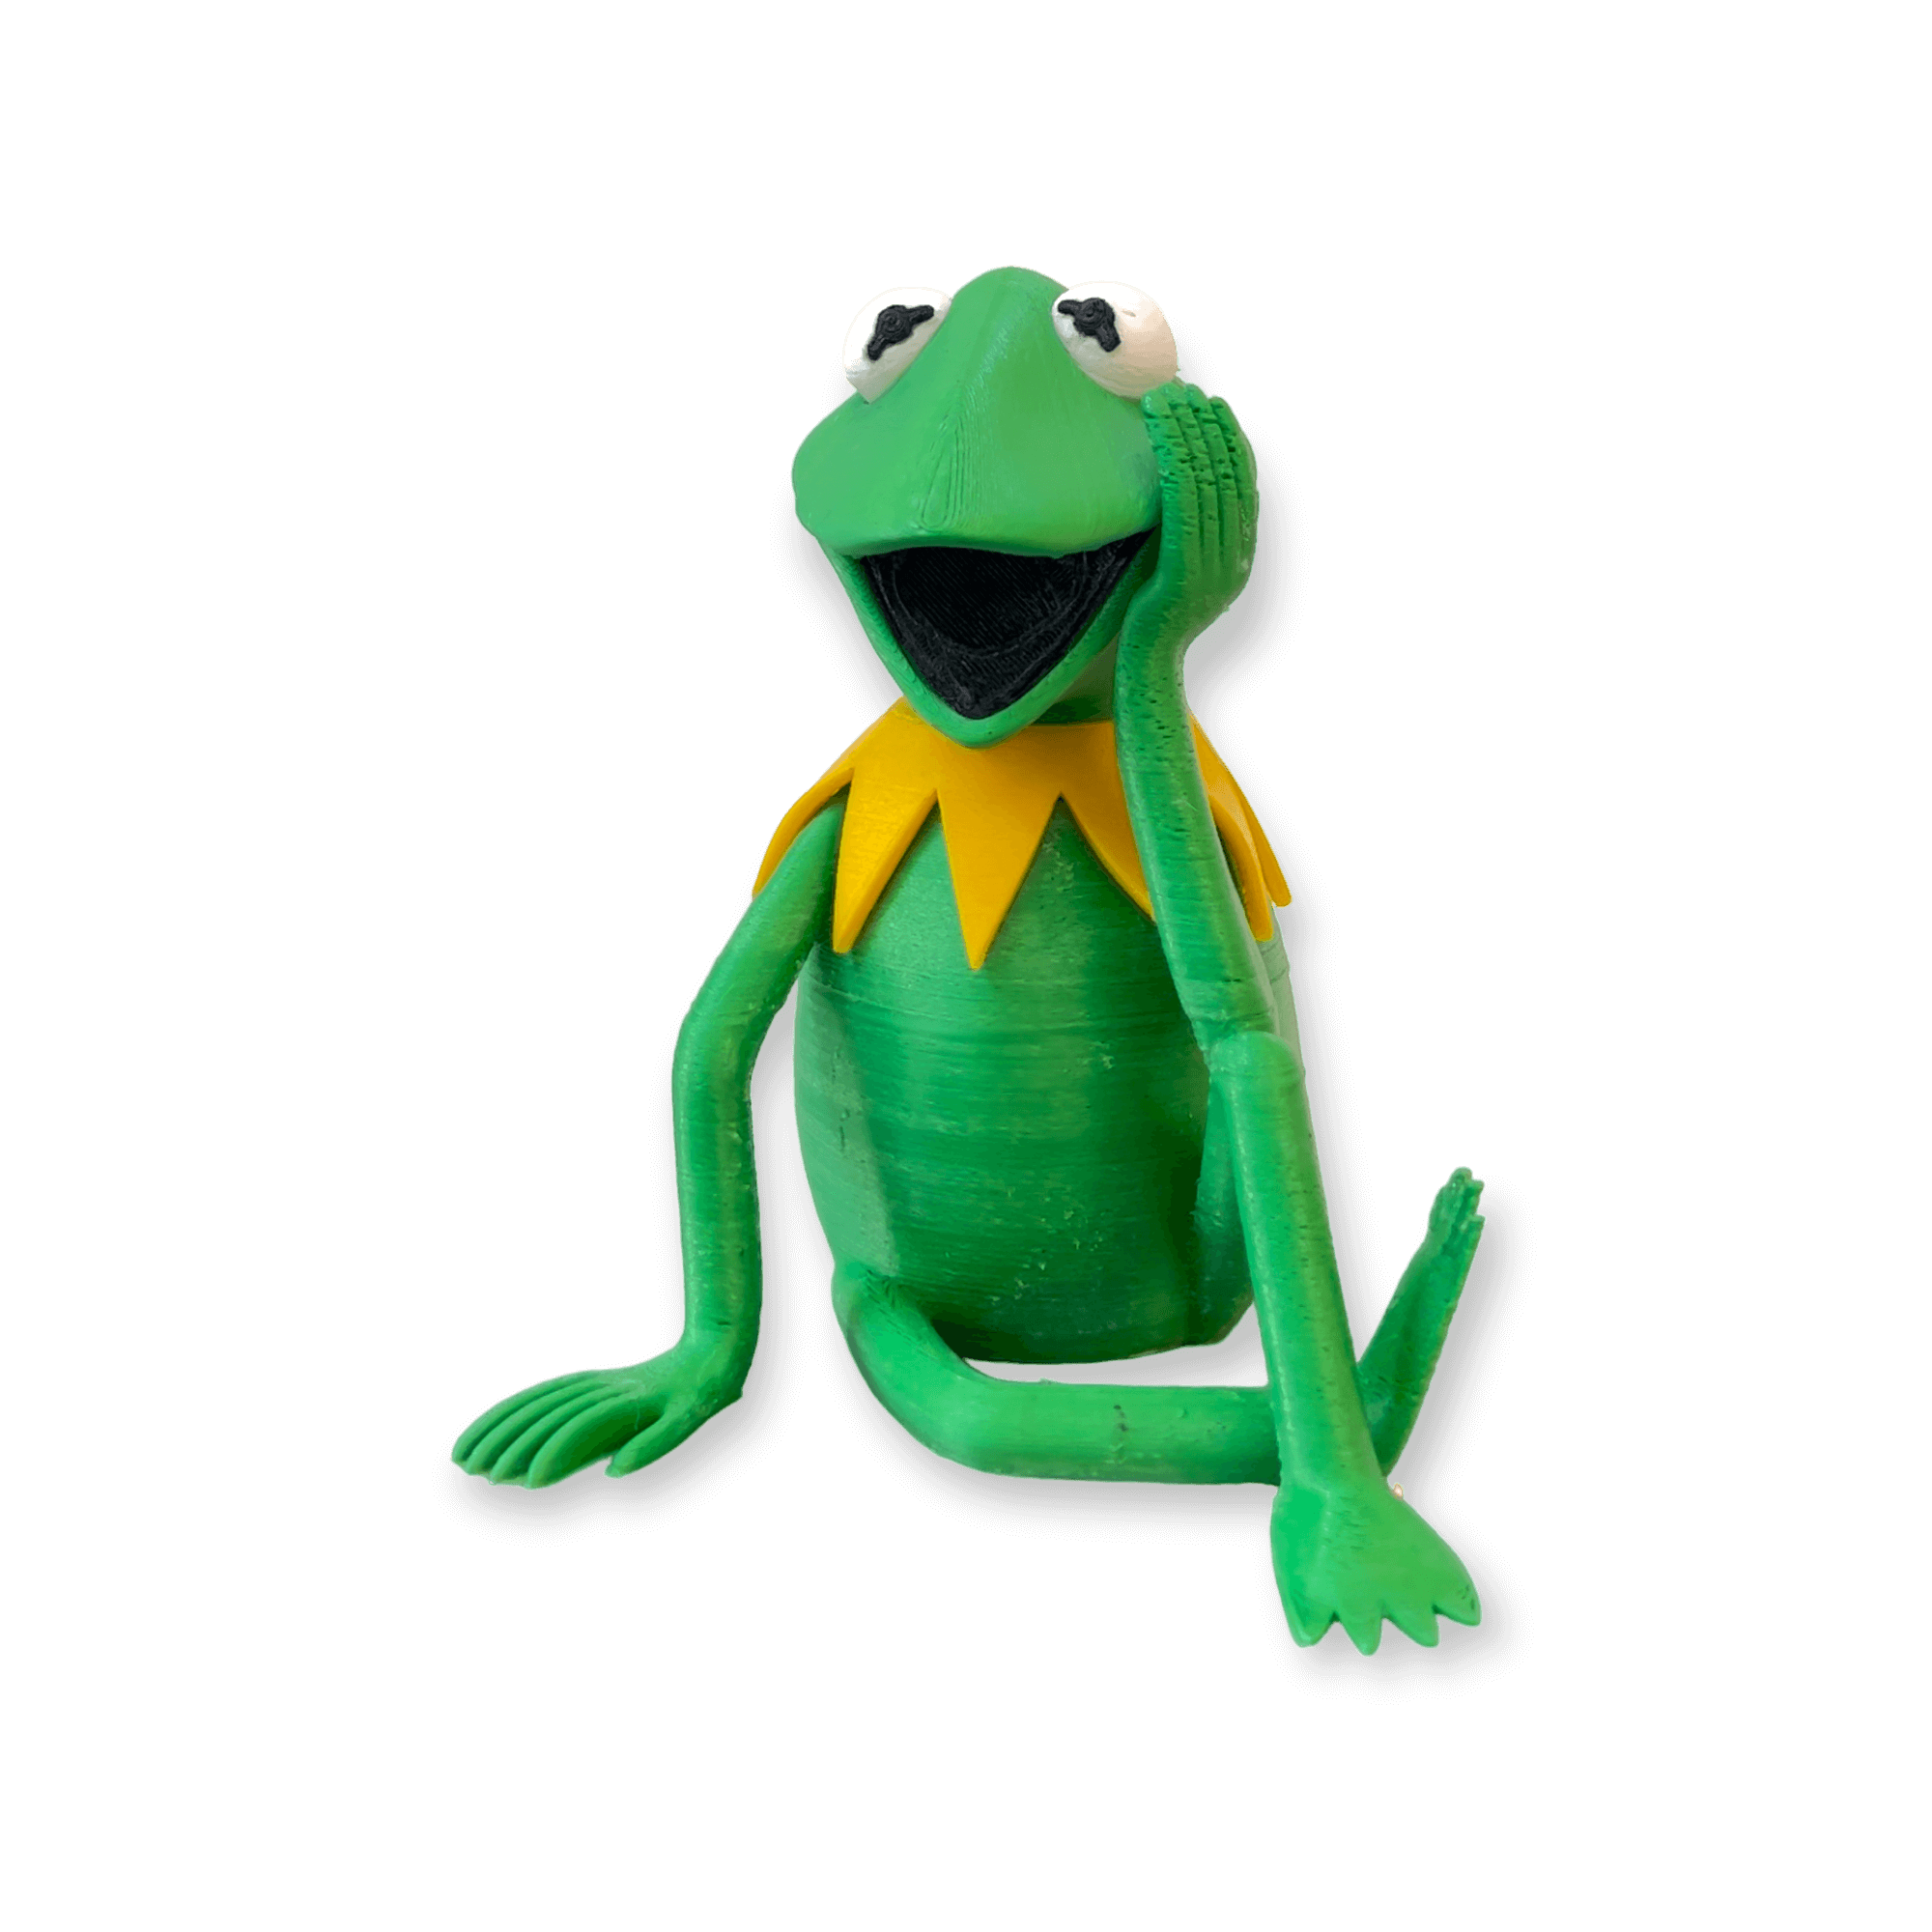 Kermit the frog 3d print10.PNG